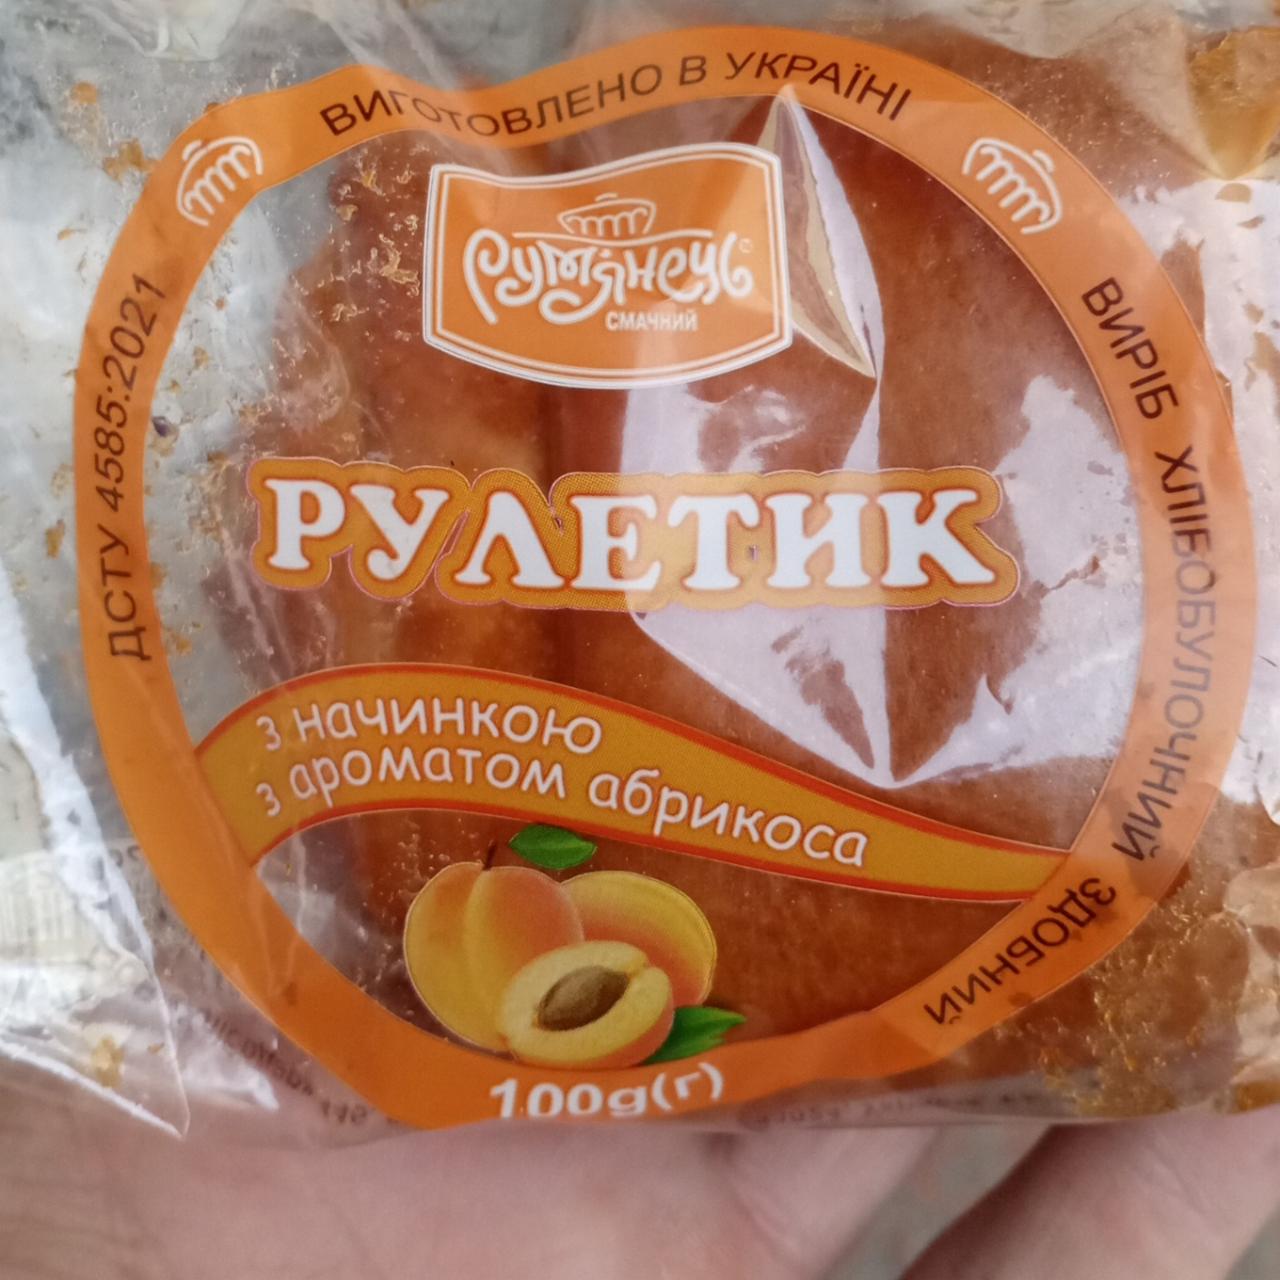 Фото - Рулетик с начинкой с ароматом абрикоса Рум'янець